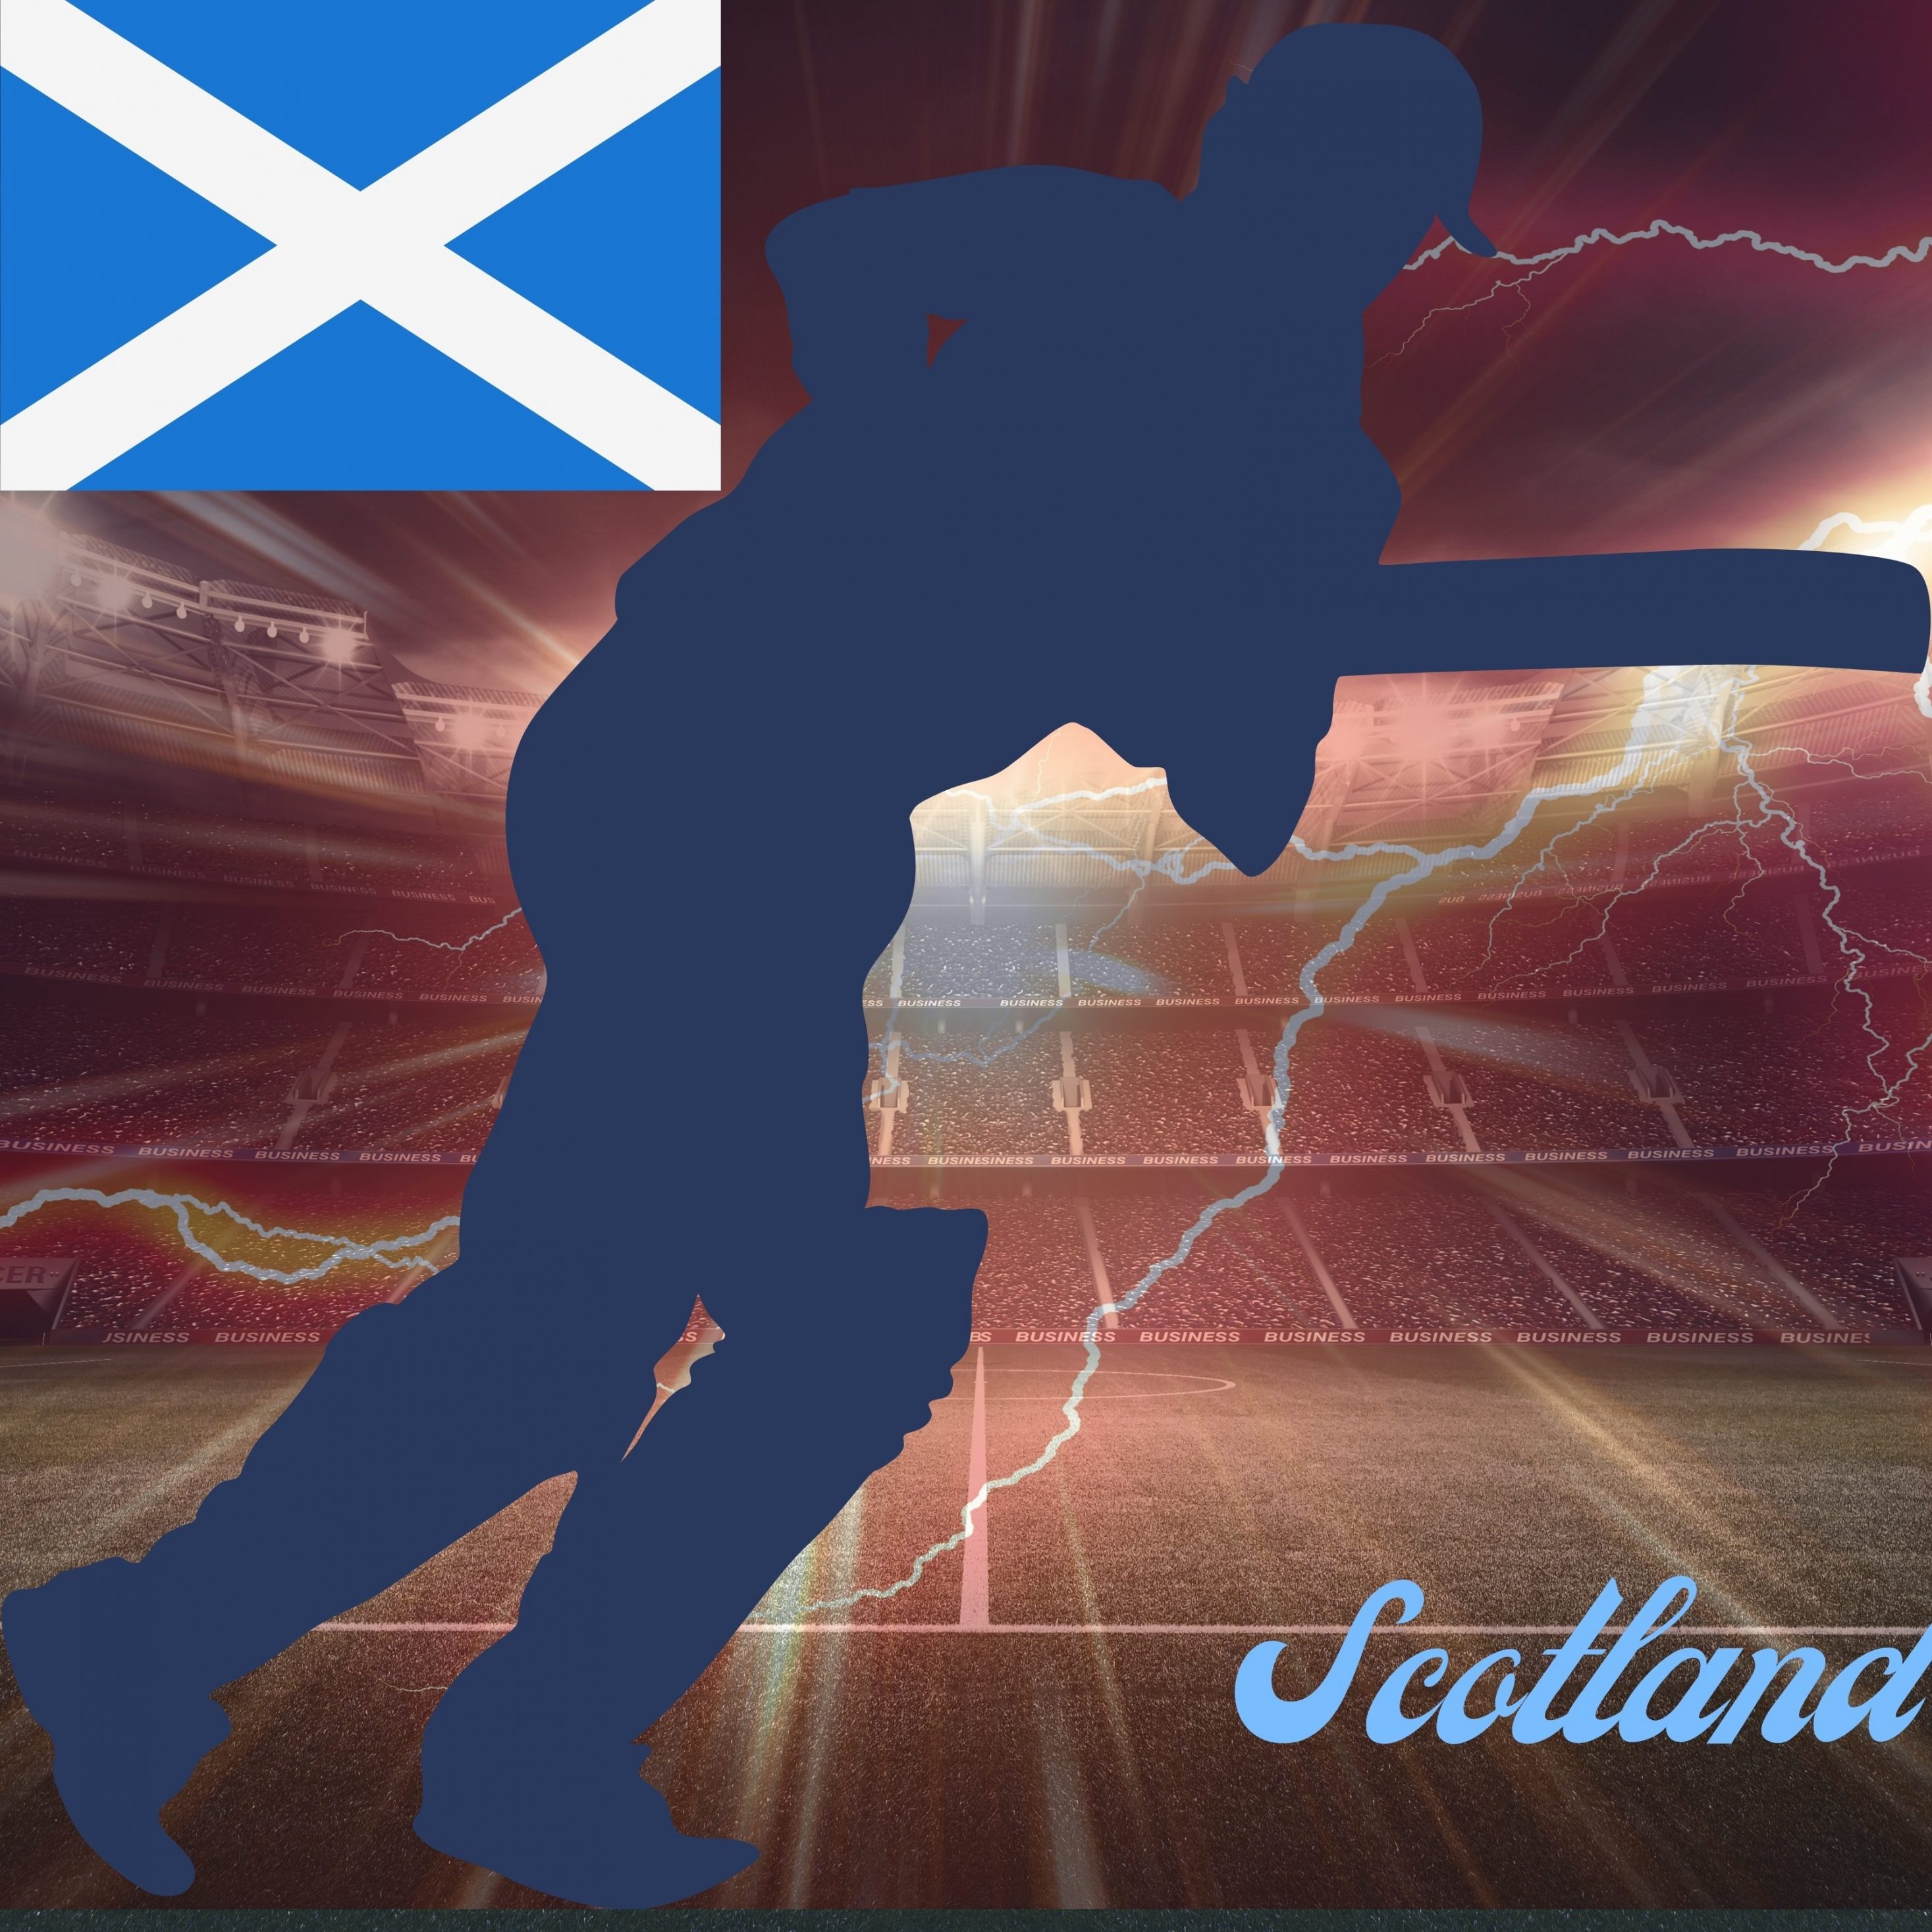 2934x2934 iOS iPad wallpaper 4k Scotland Cricket Stadium iPad Wallpaper 2934x2934 pixels resolution